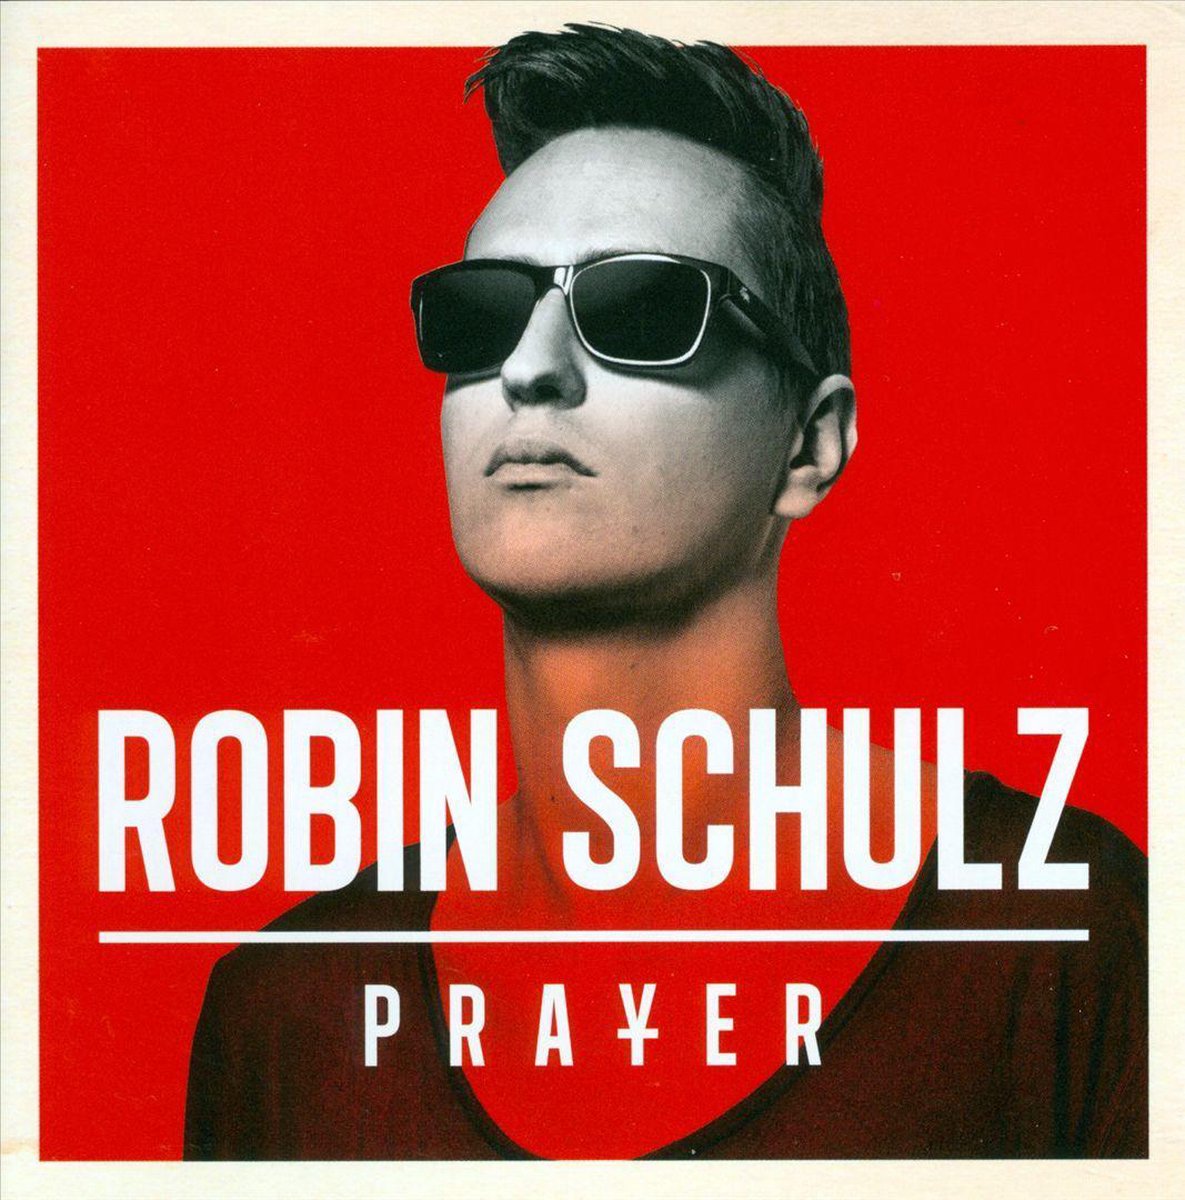 Extended Prayer - Robin Schulz